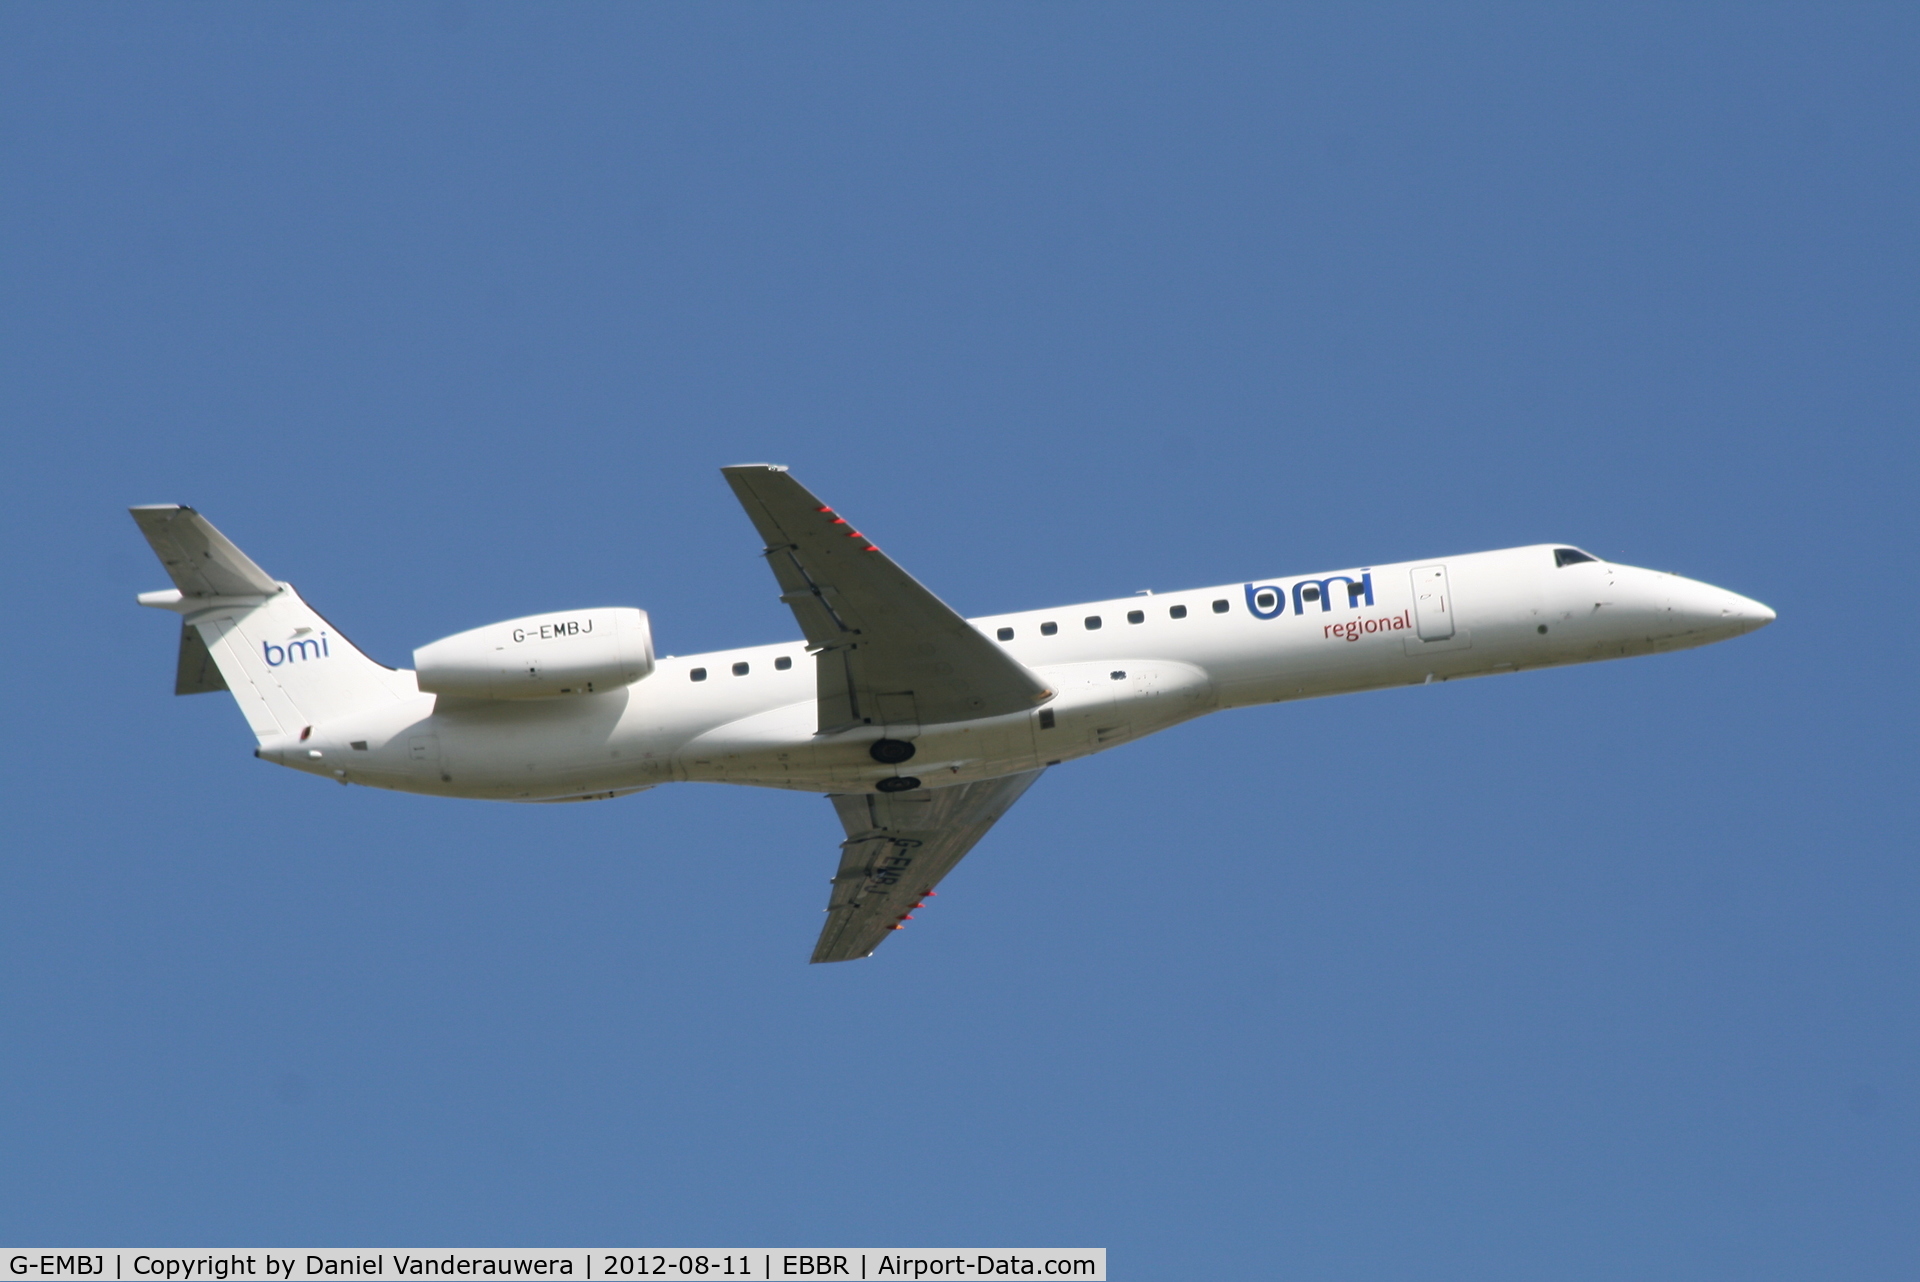 G-EMBJ, 1999 Embraer ERJ-145EU (EMB-145EU) C/N 145134, Flight BD1628 is climbing fom RWY 07R